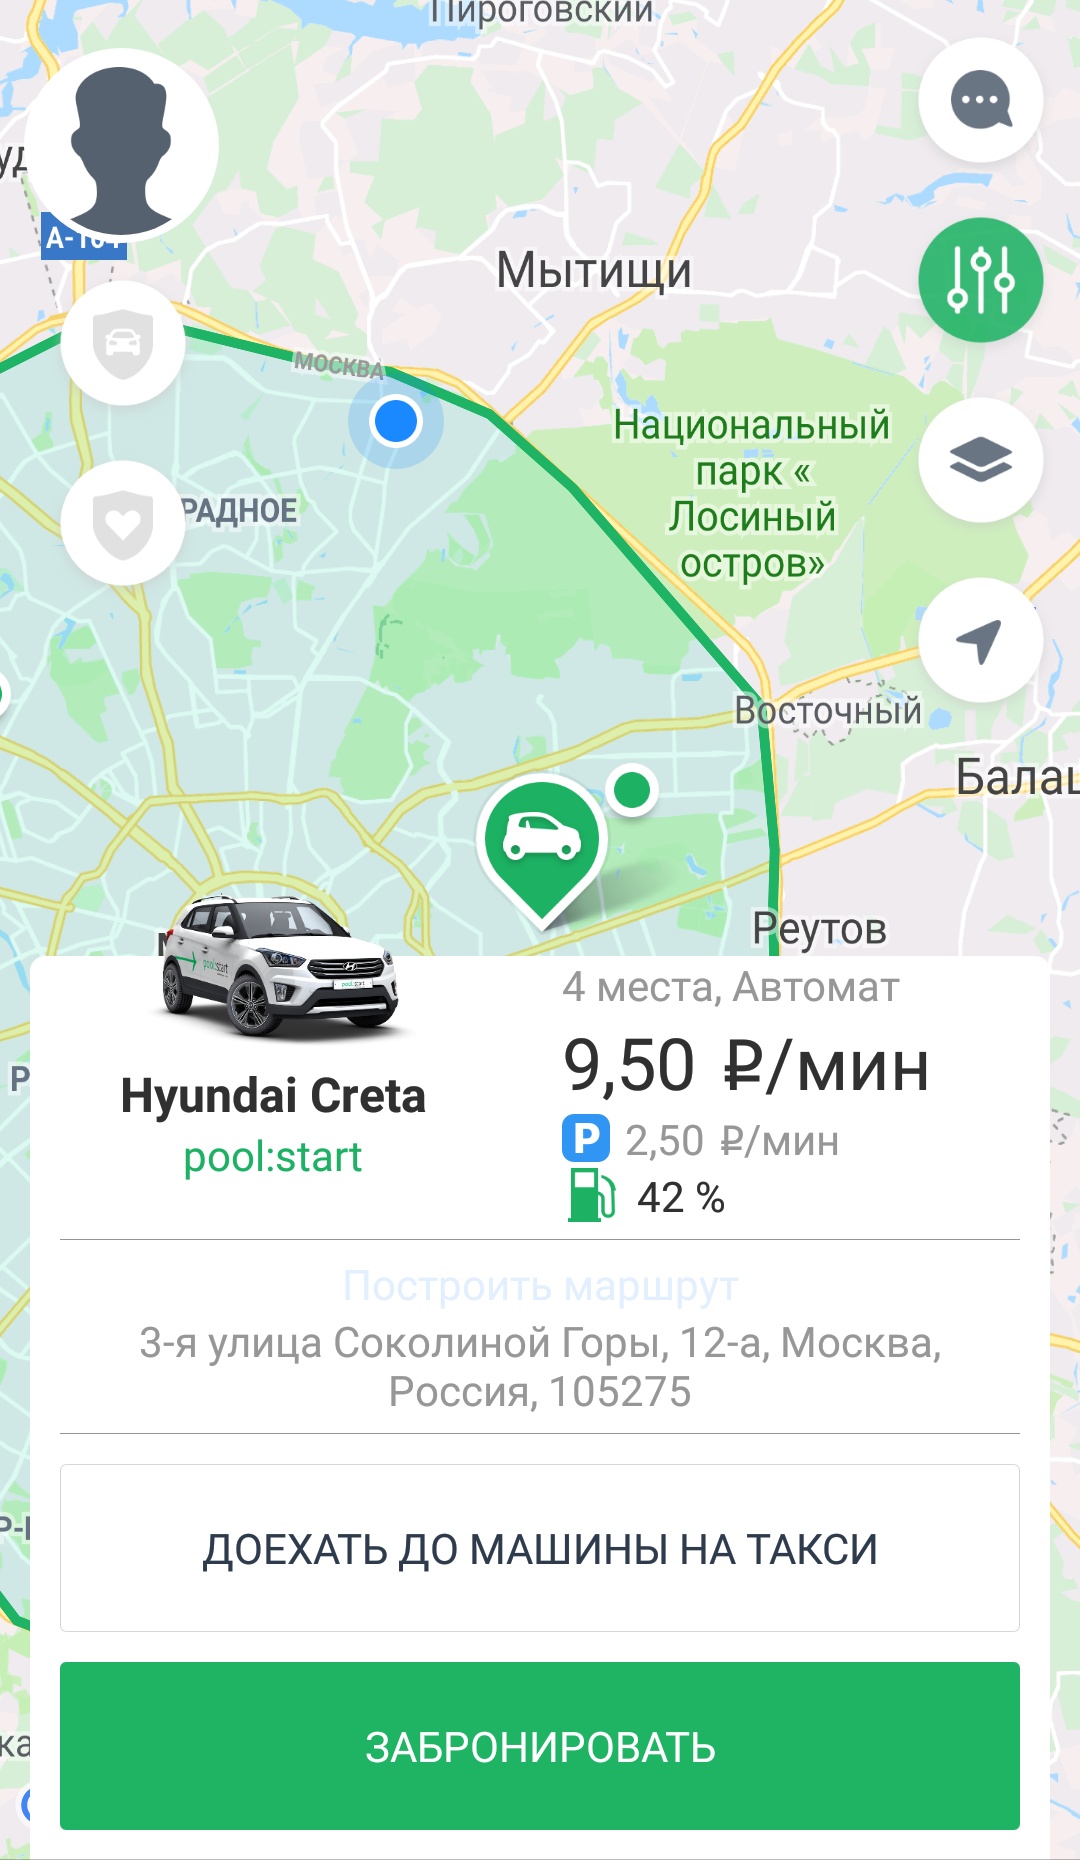 Pool:start Hyundai Creta